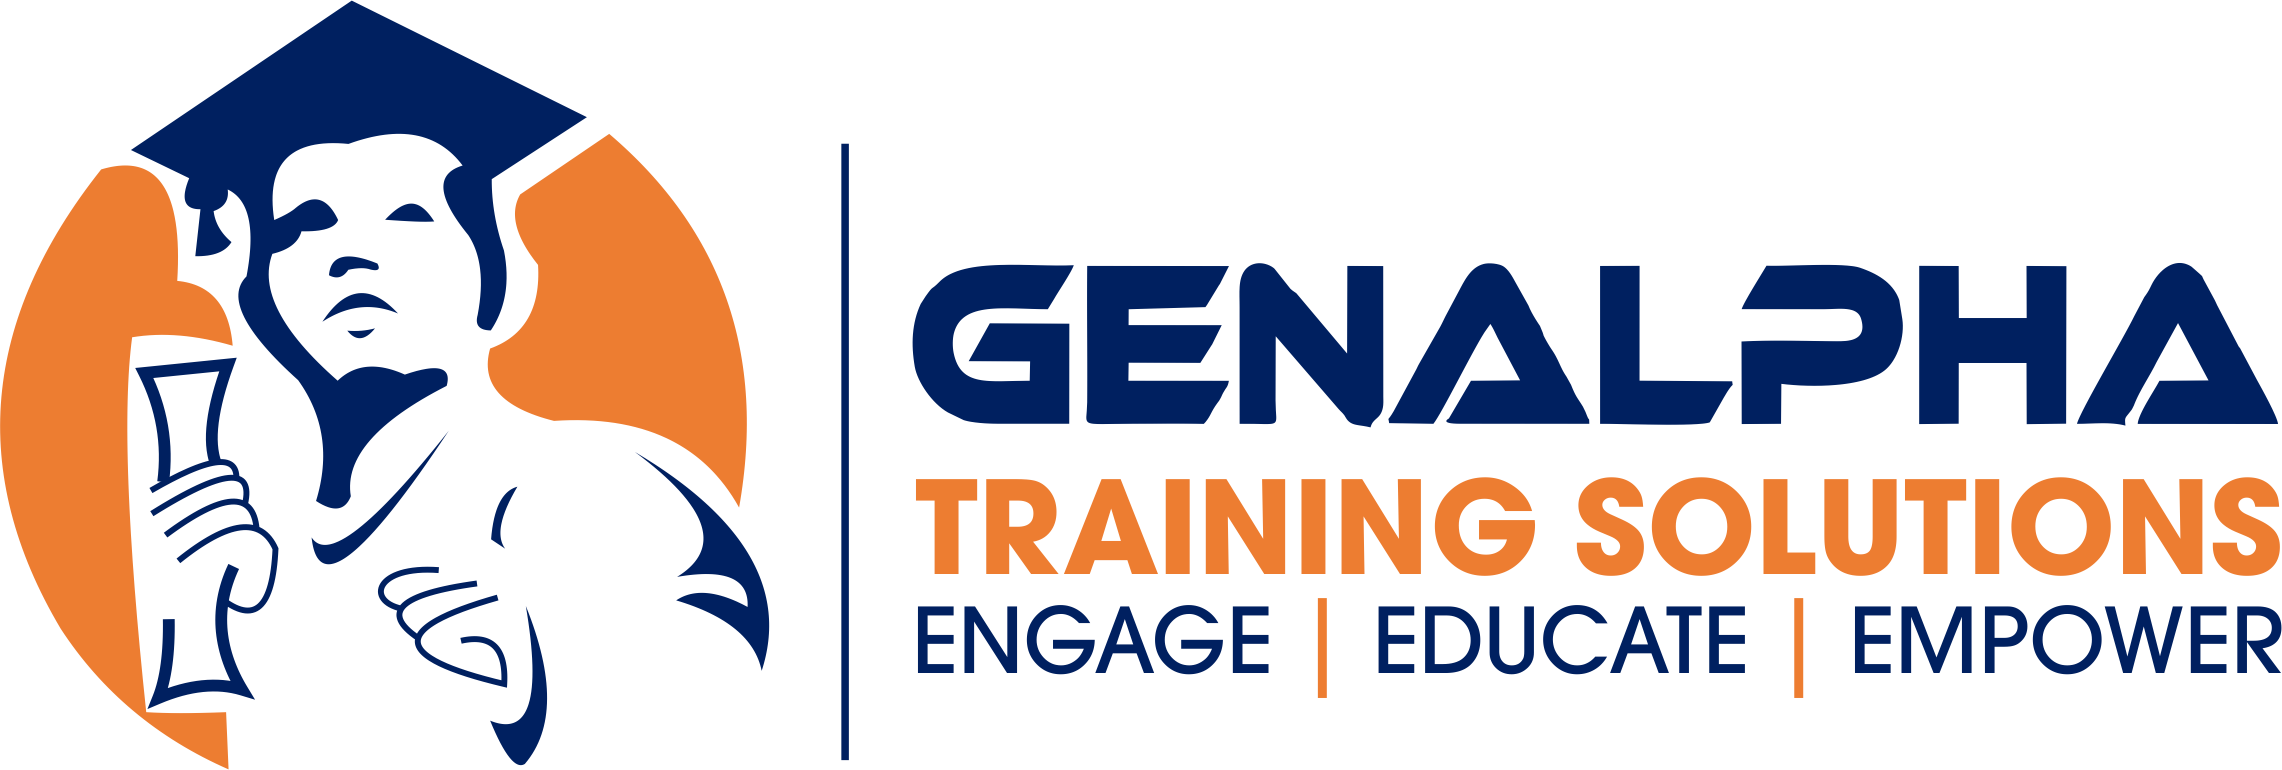 Genalpha Training Solutions (Unverified) logo